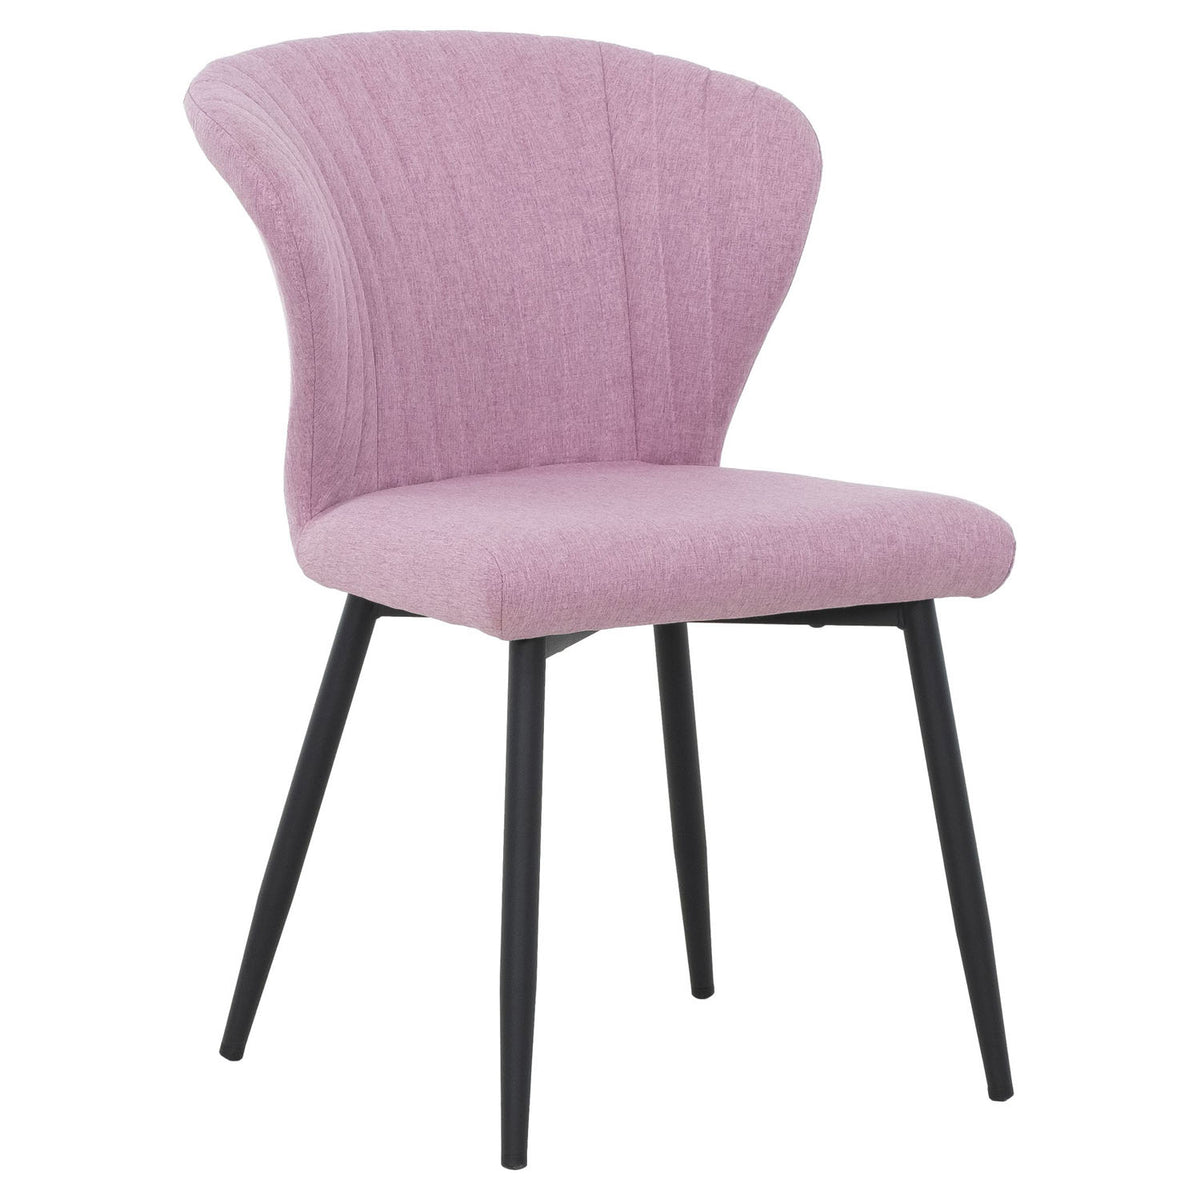 Blush Dining Chair - MJM Furniture